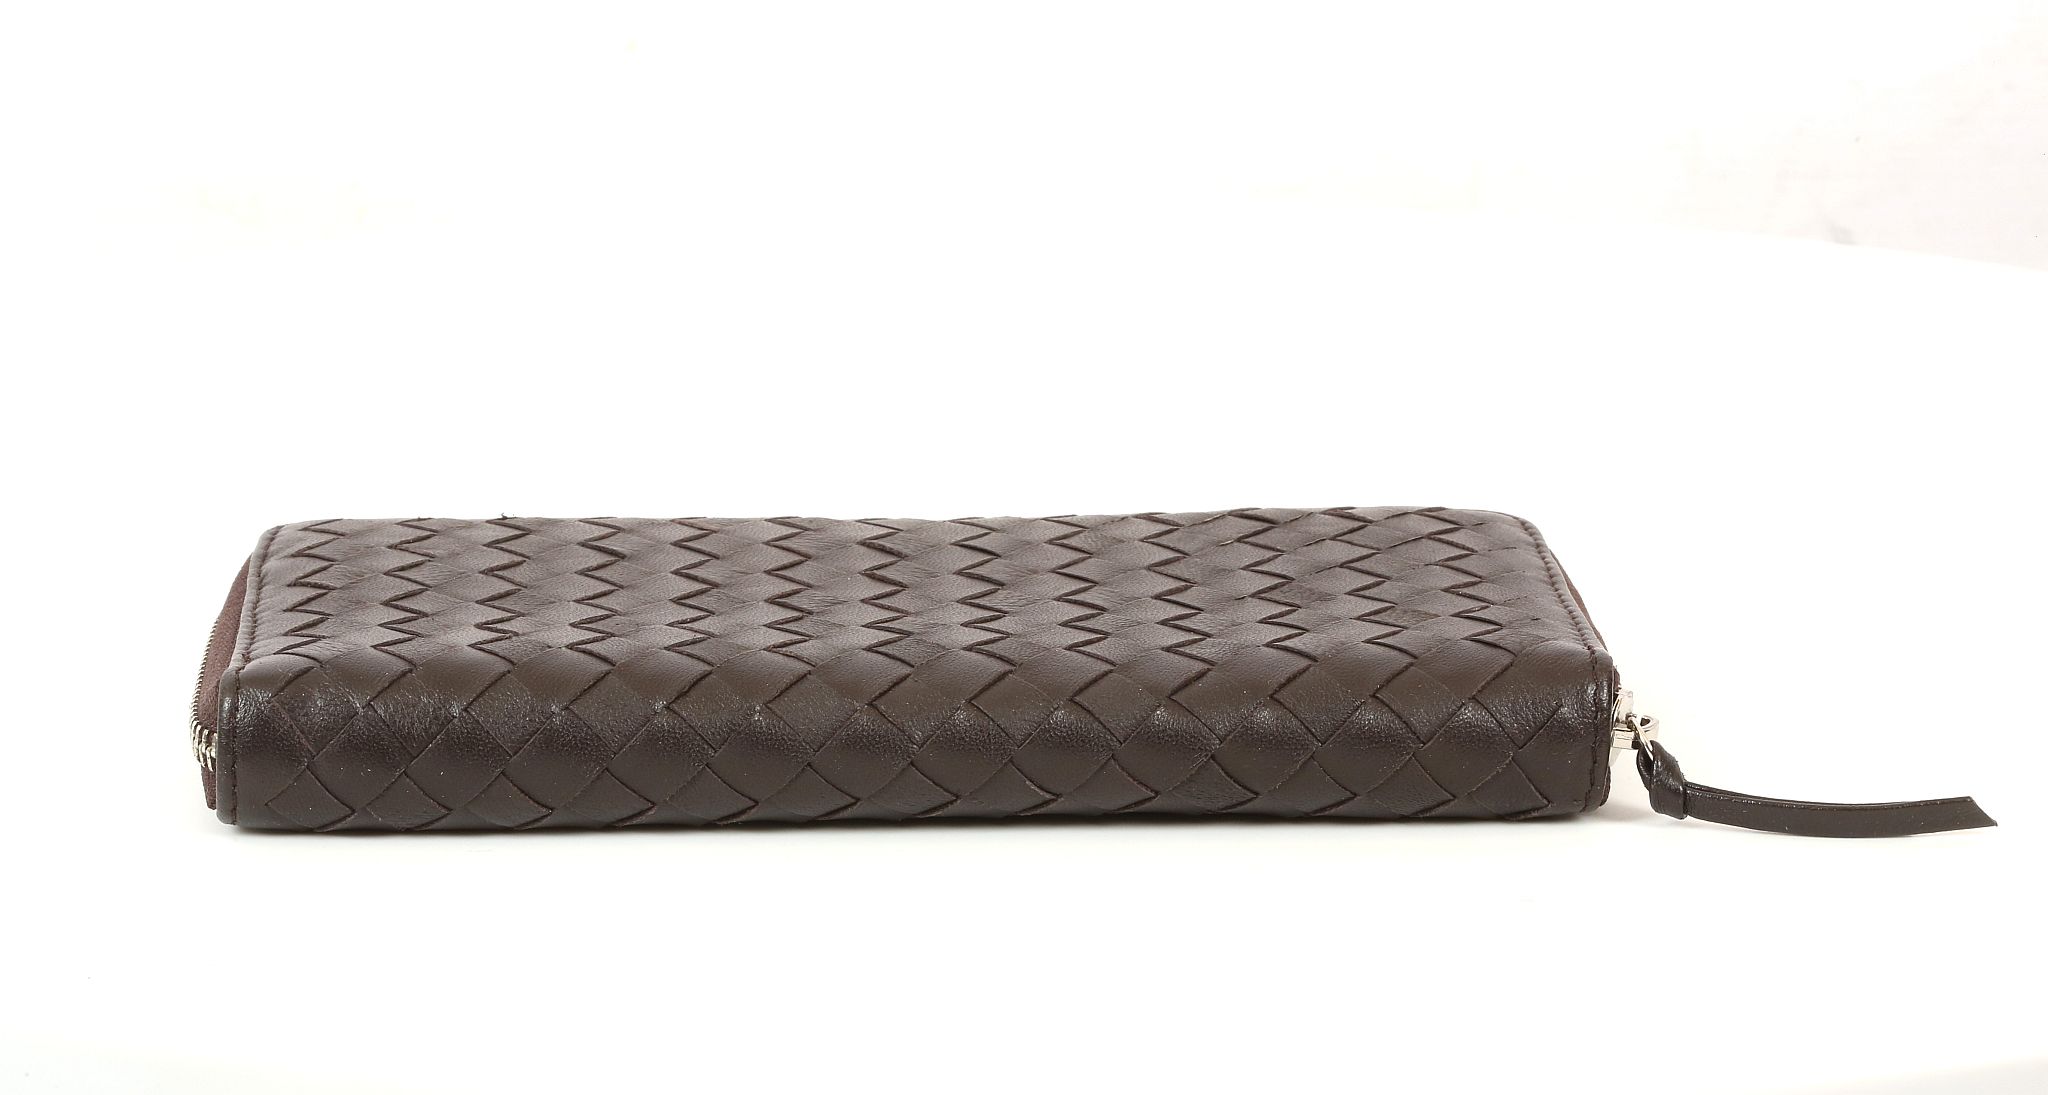 BOTTEGA VENETA PURSE, woven dark brown leather, 20cm wide, 10cm high - Image 7 of 8